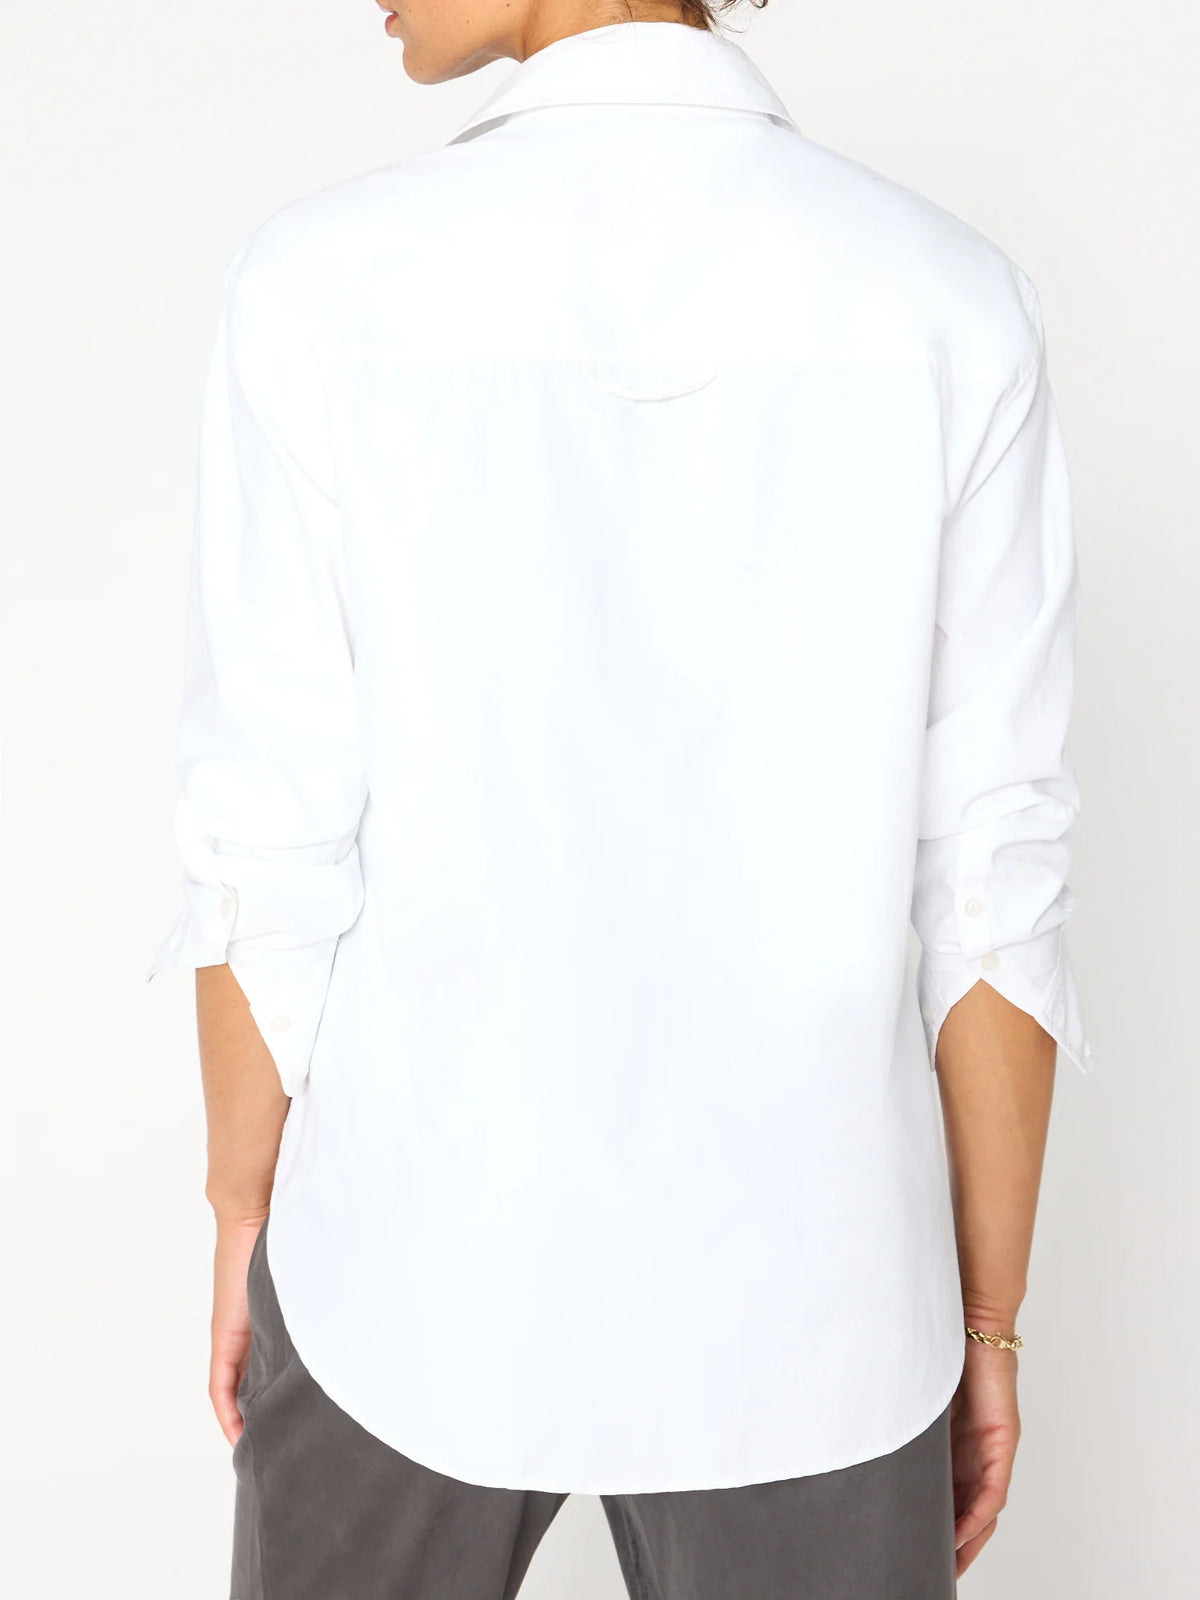 Brochu Walker Everyday White Shirt